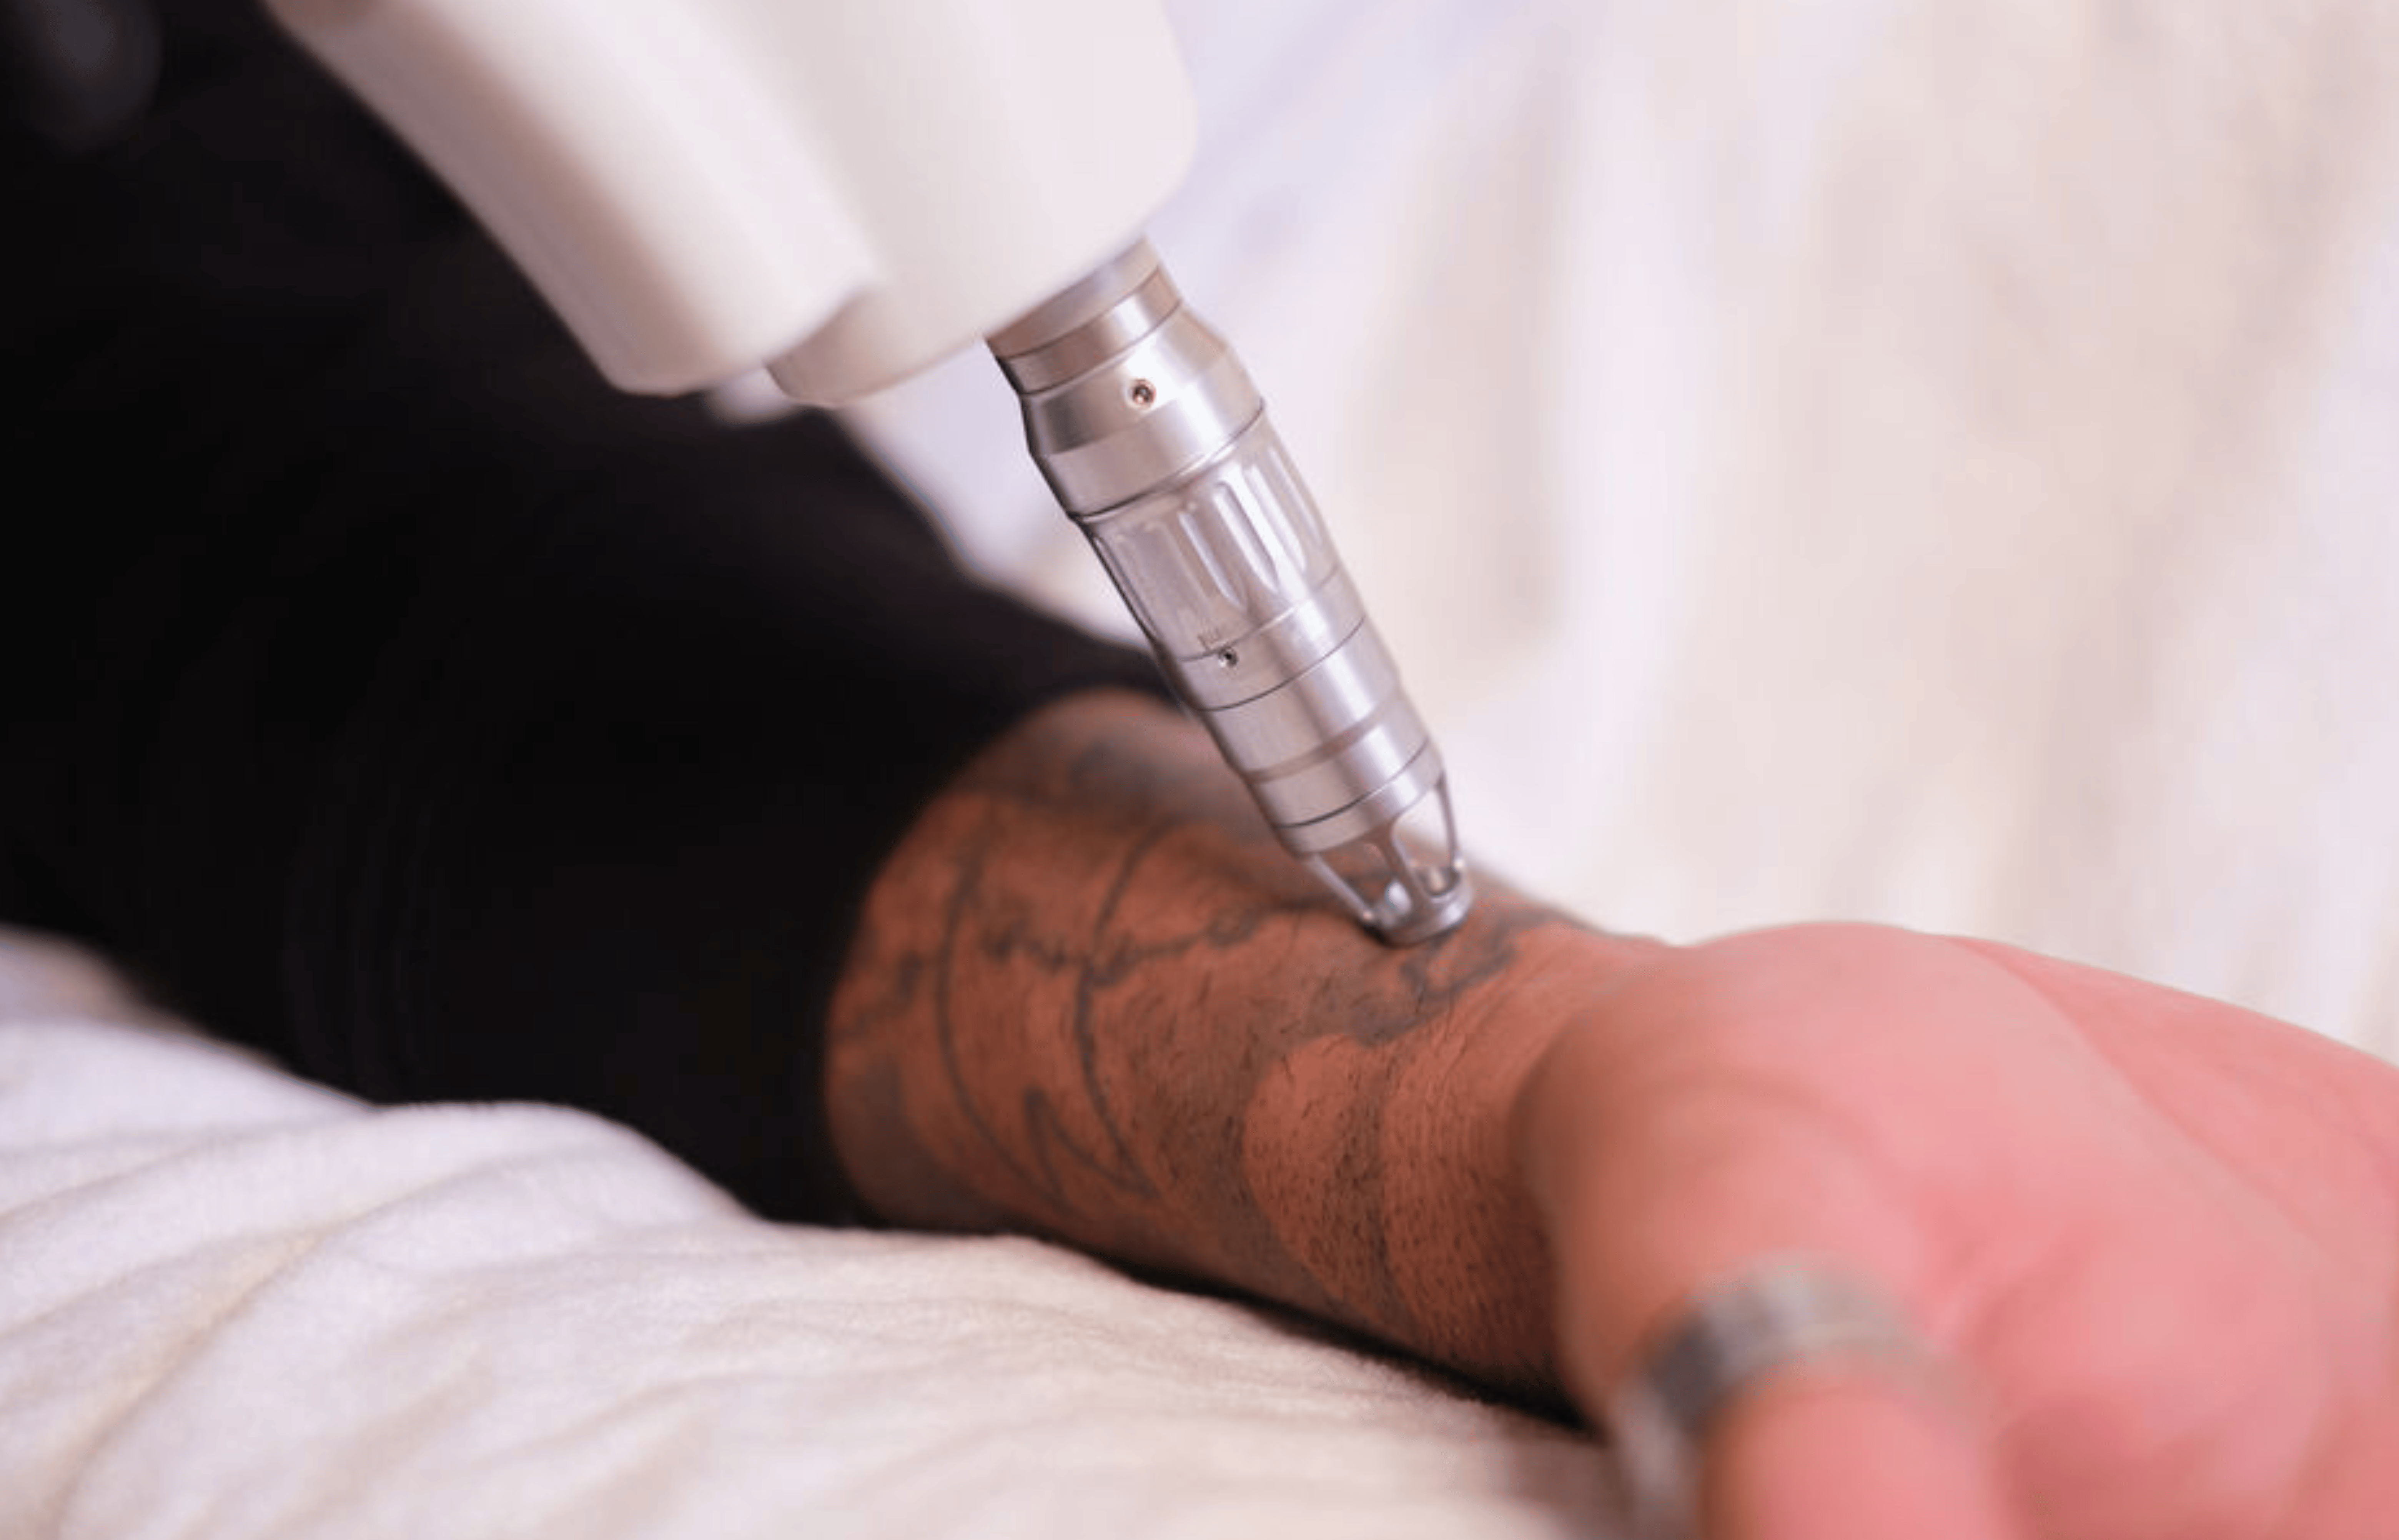 Laser Tattoo Removal Perth